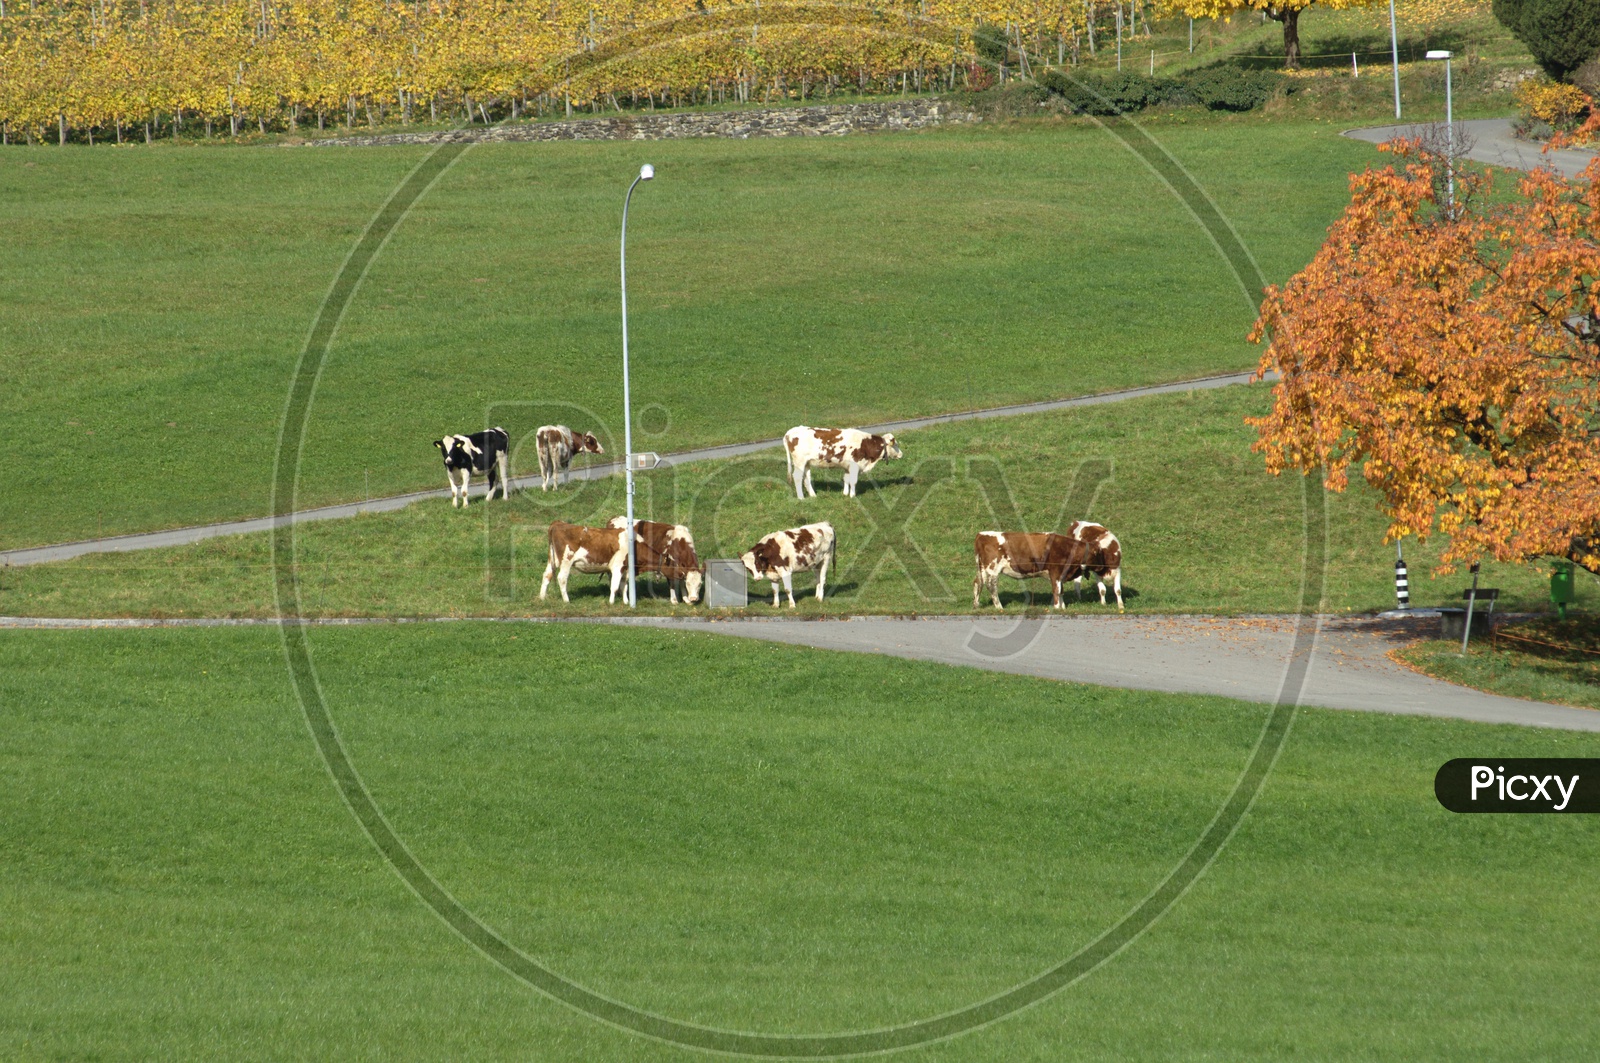 cows grazing in the open green field